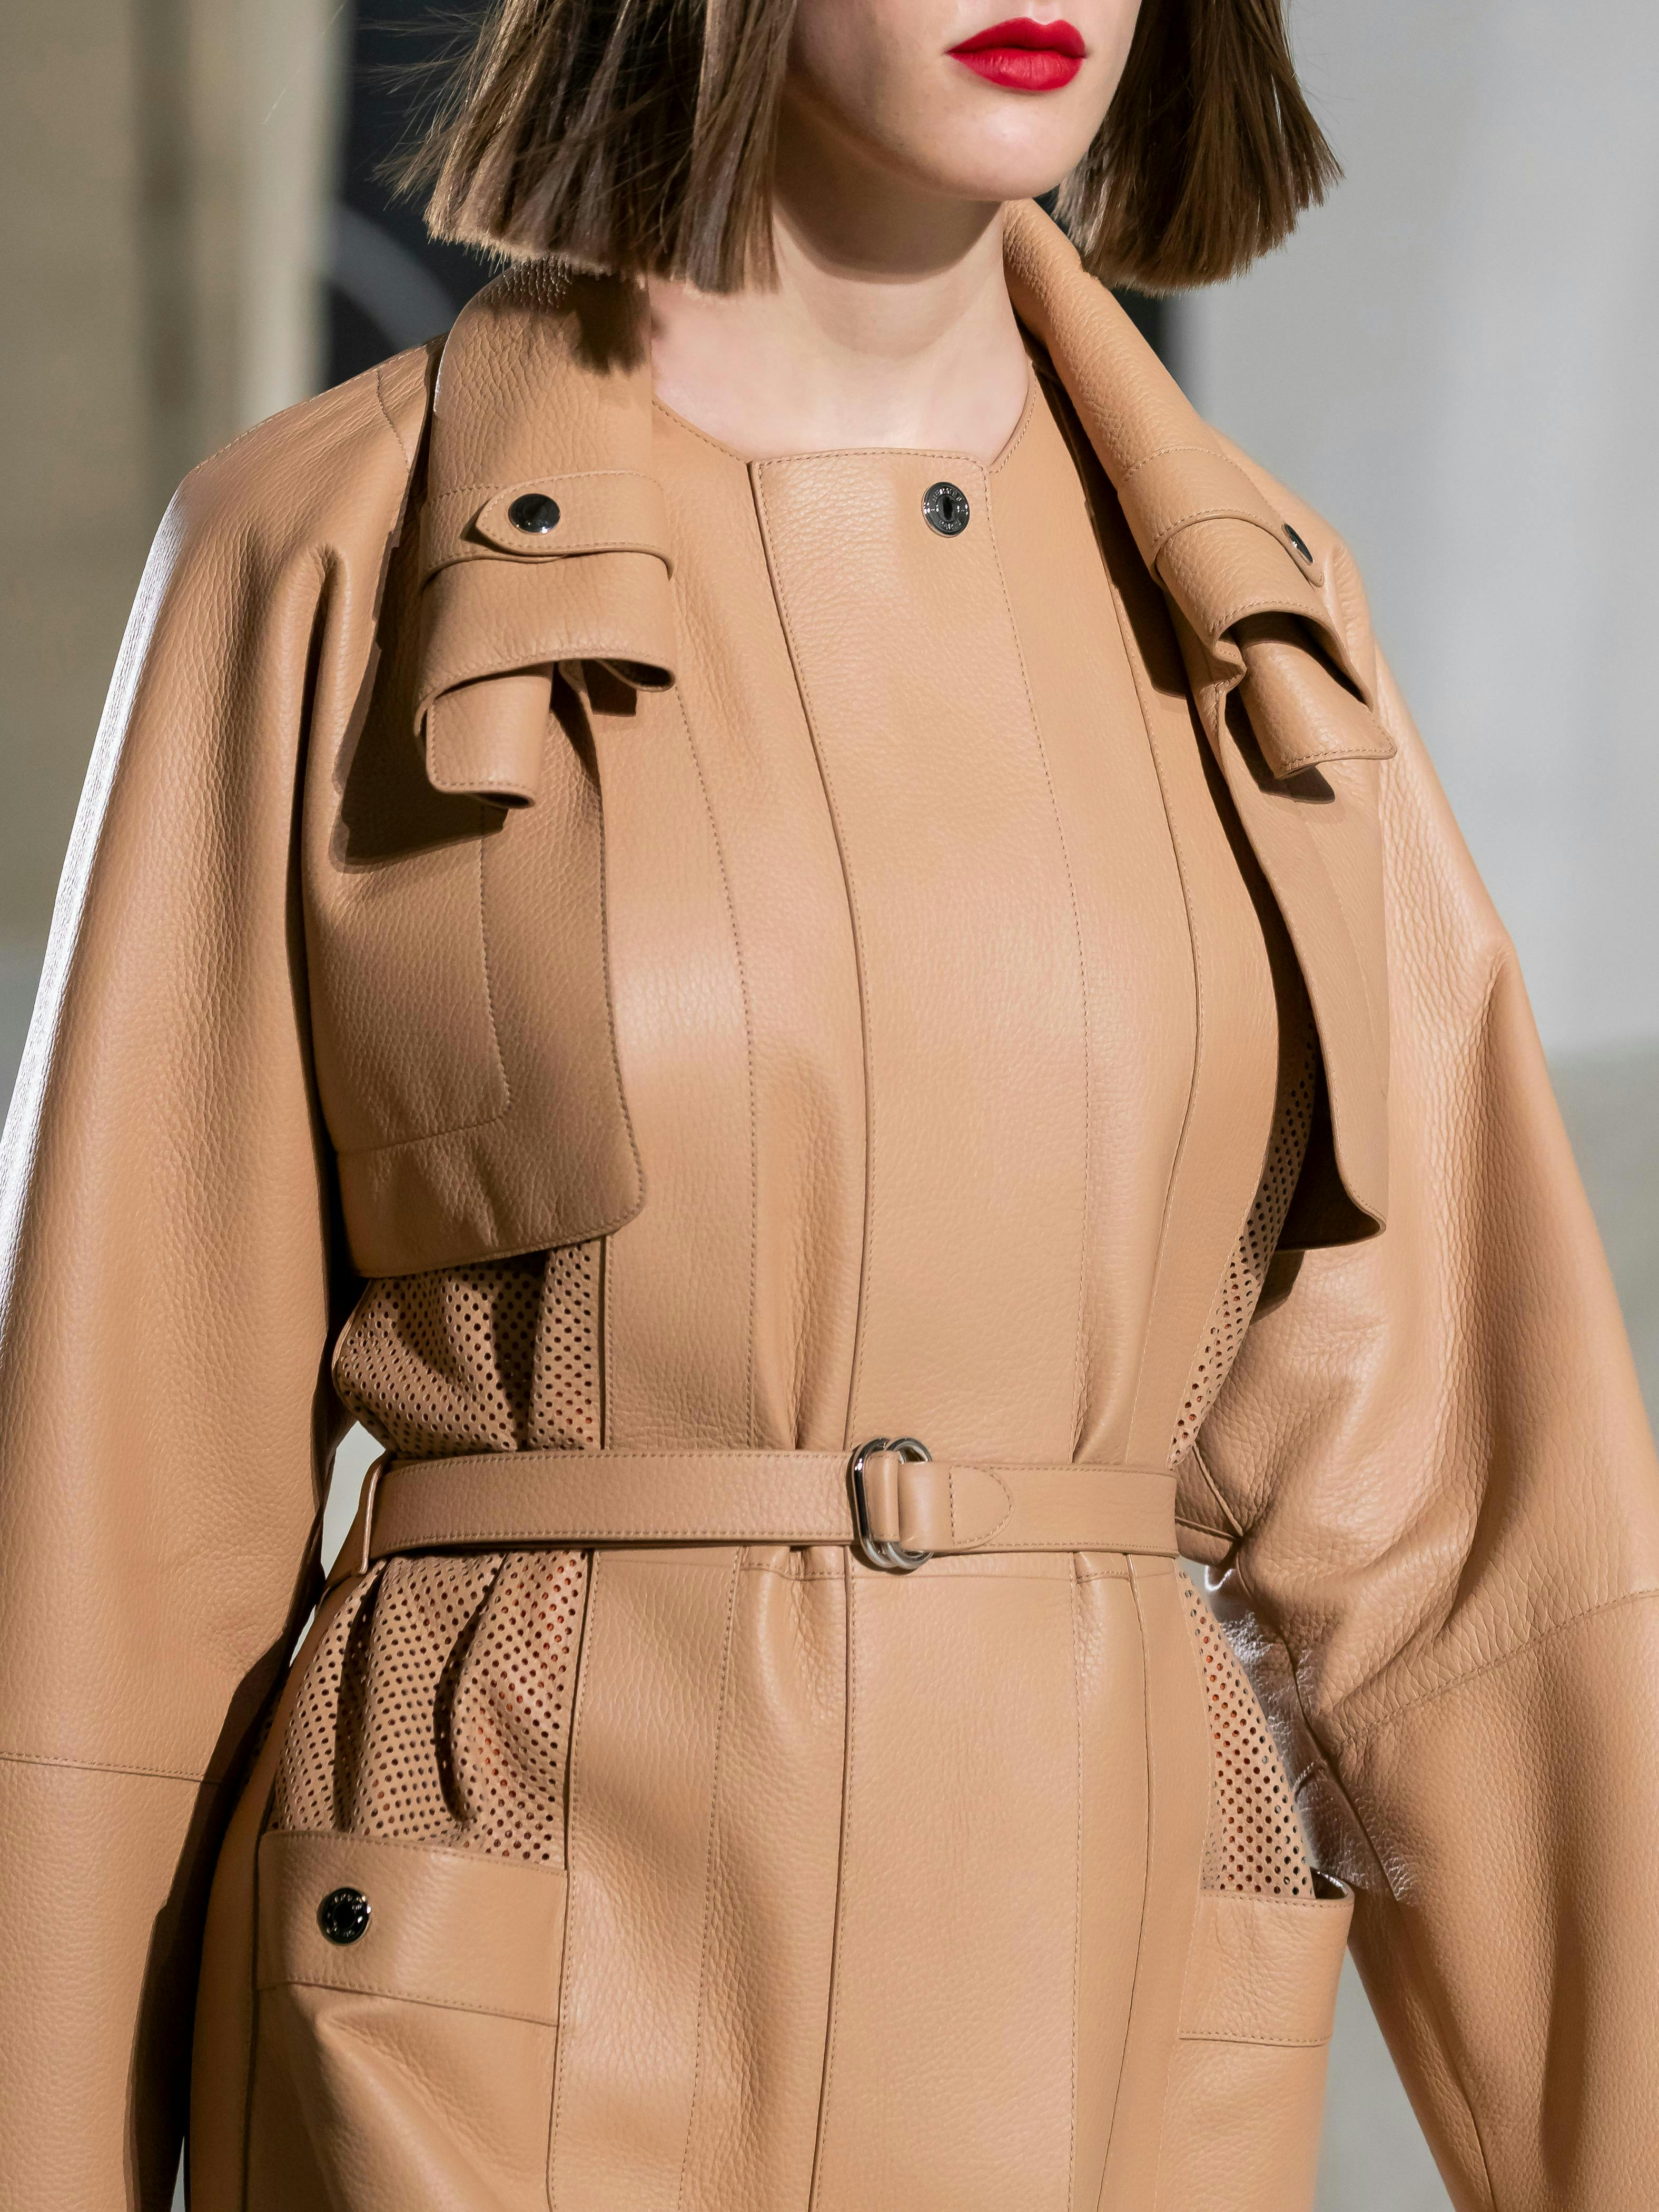 clothing apparel coat overcoat trench coat